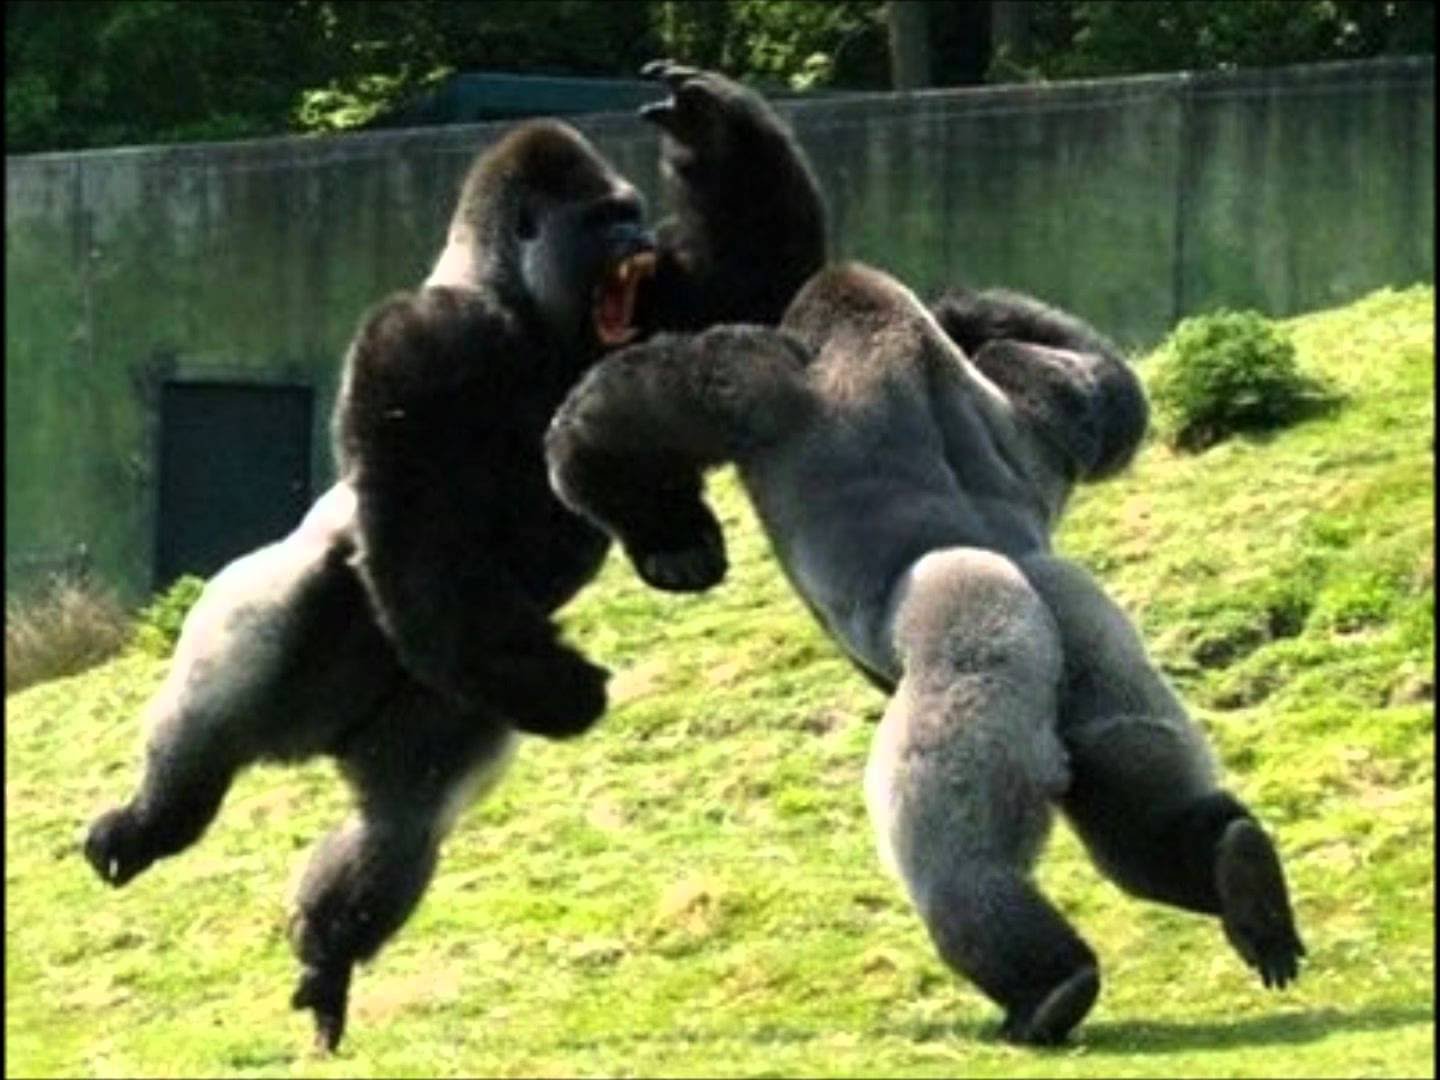 Animal Attack - Gorilla Fight